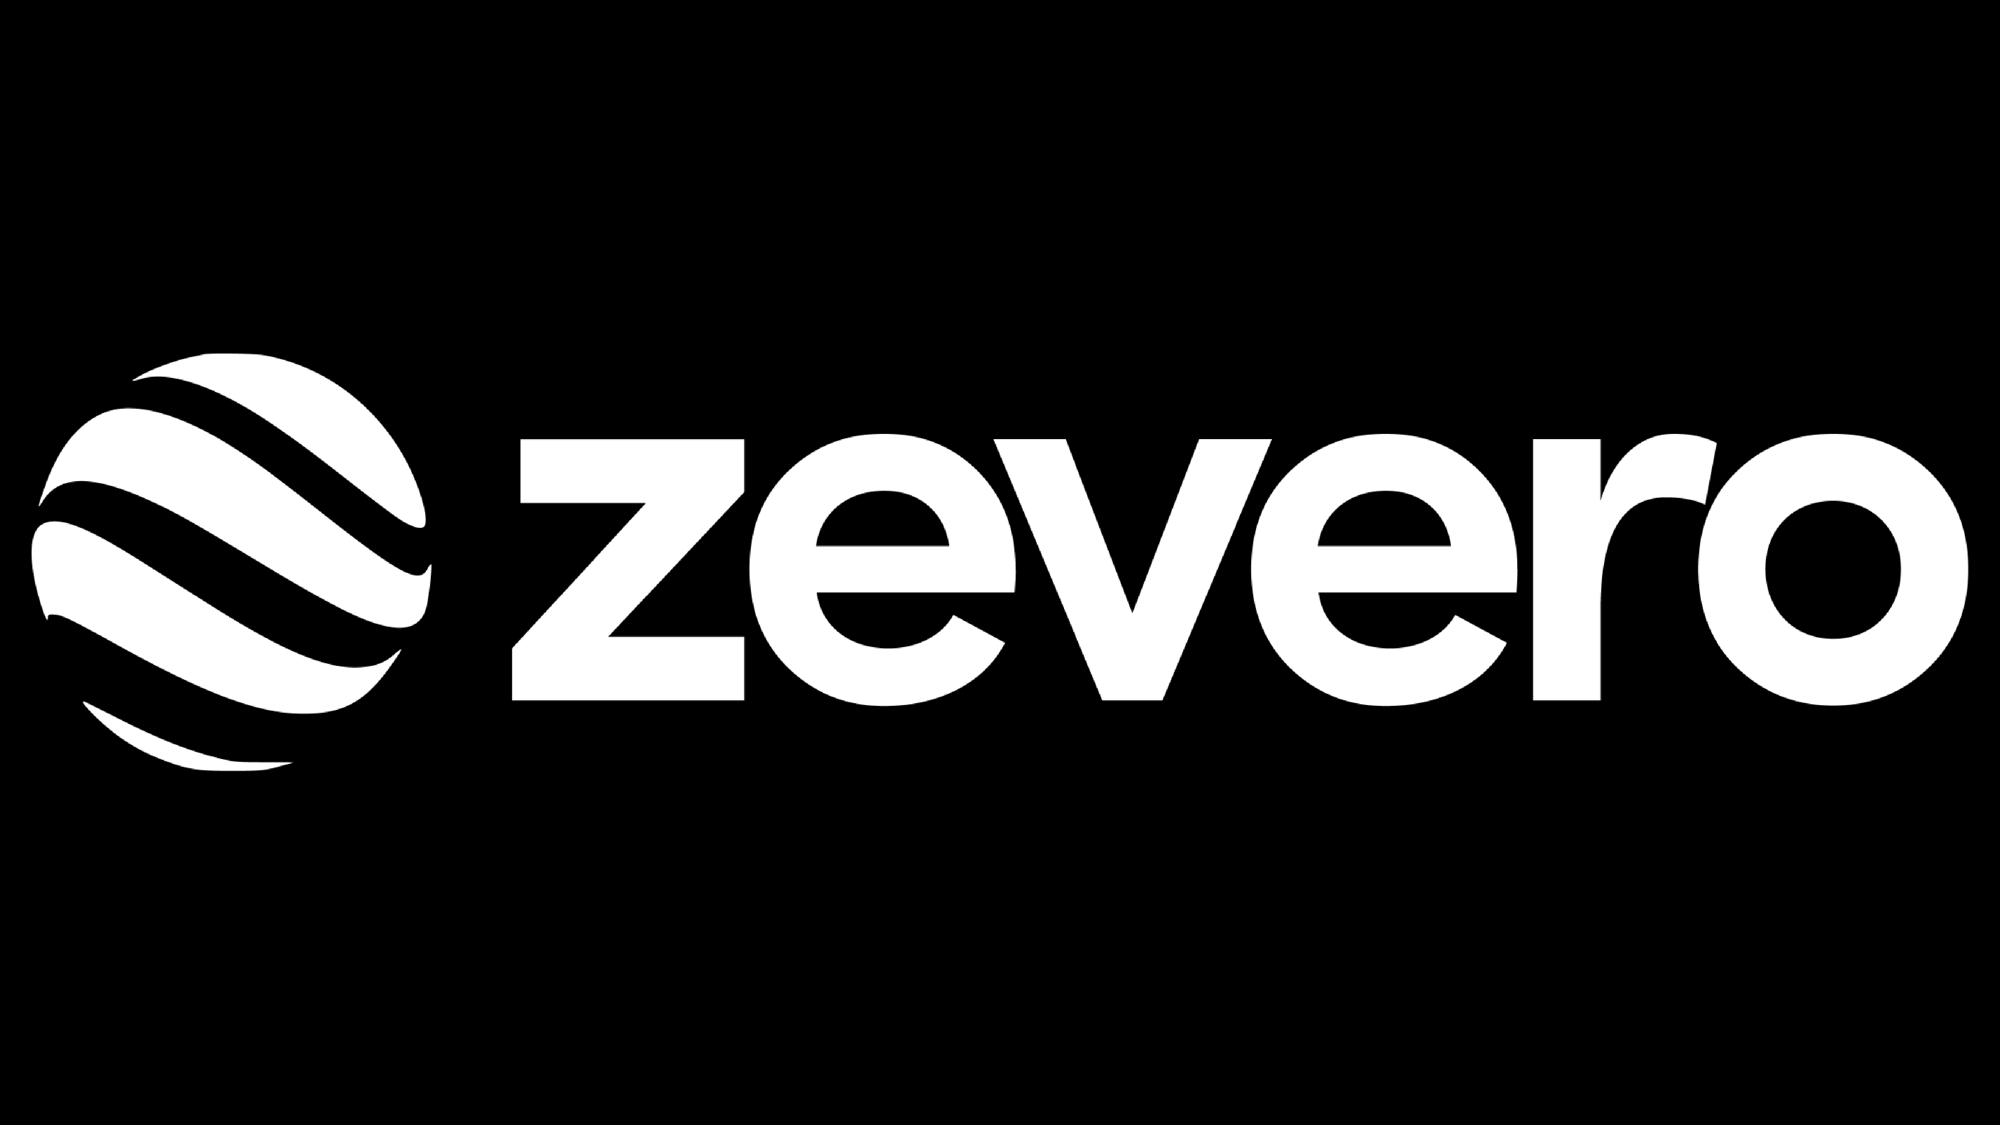 Zevero logo on a black background.